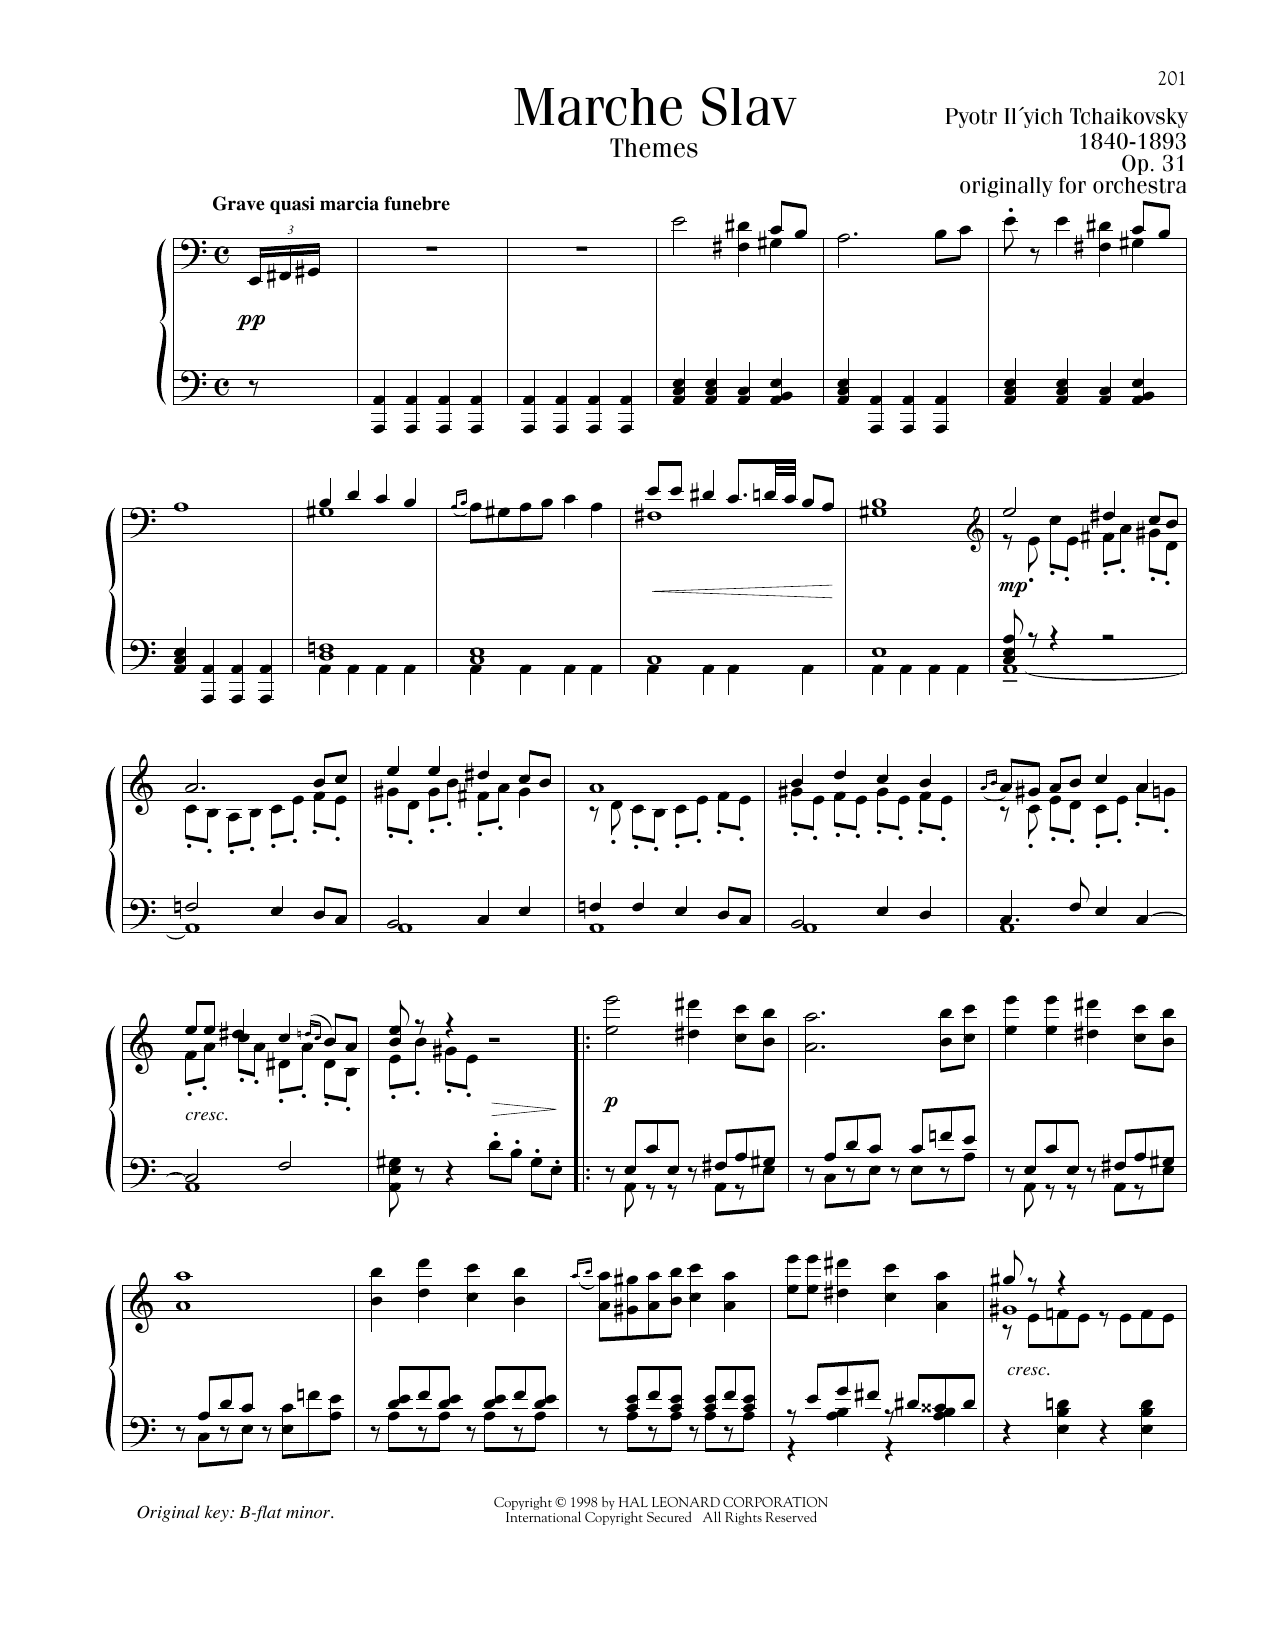 Pyotr Il'yich Tchaikovsky Marche Slav, Op. 31 sheet music notes printable PDF score